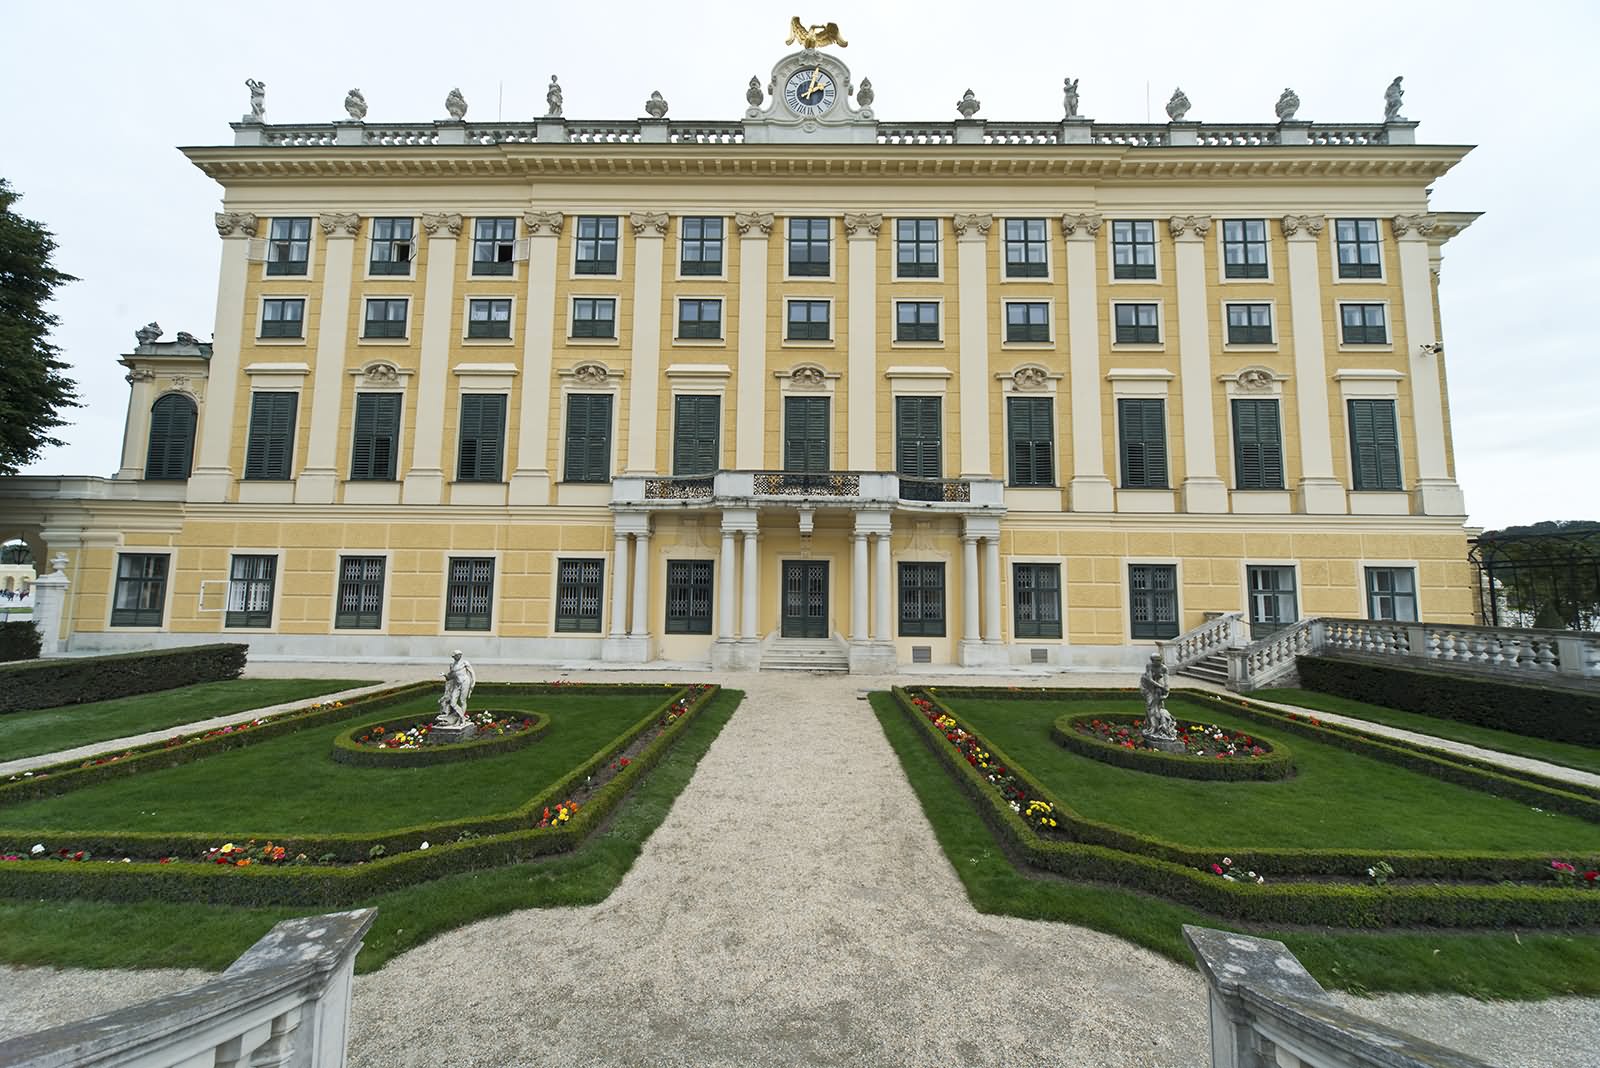 View Of The Schonbrunn Palace In Vienna, Austria